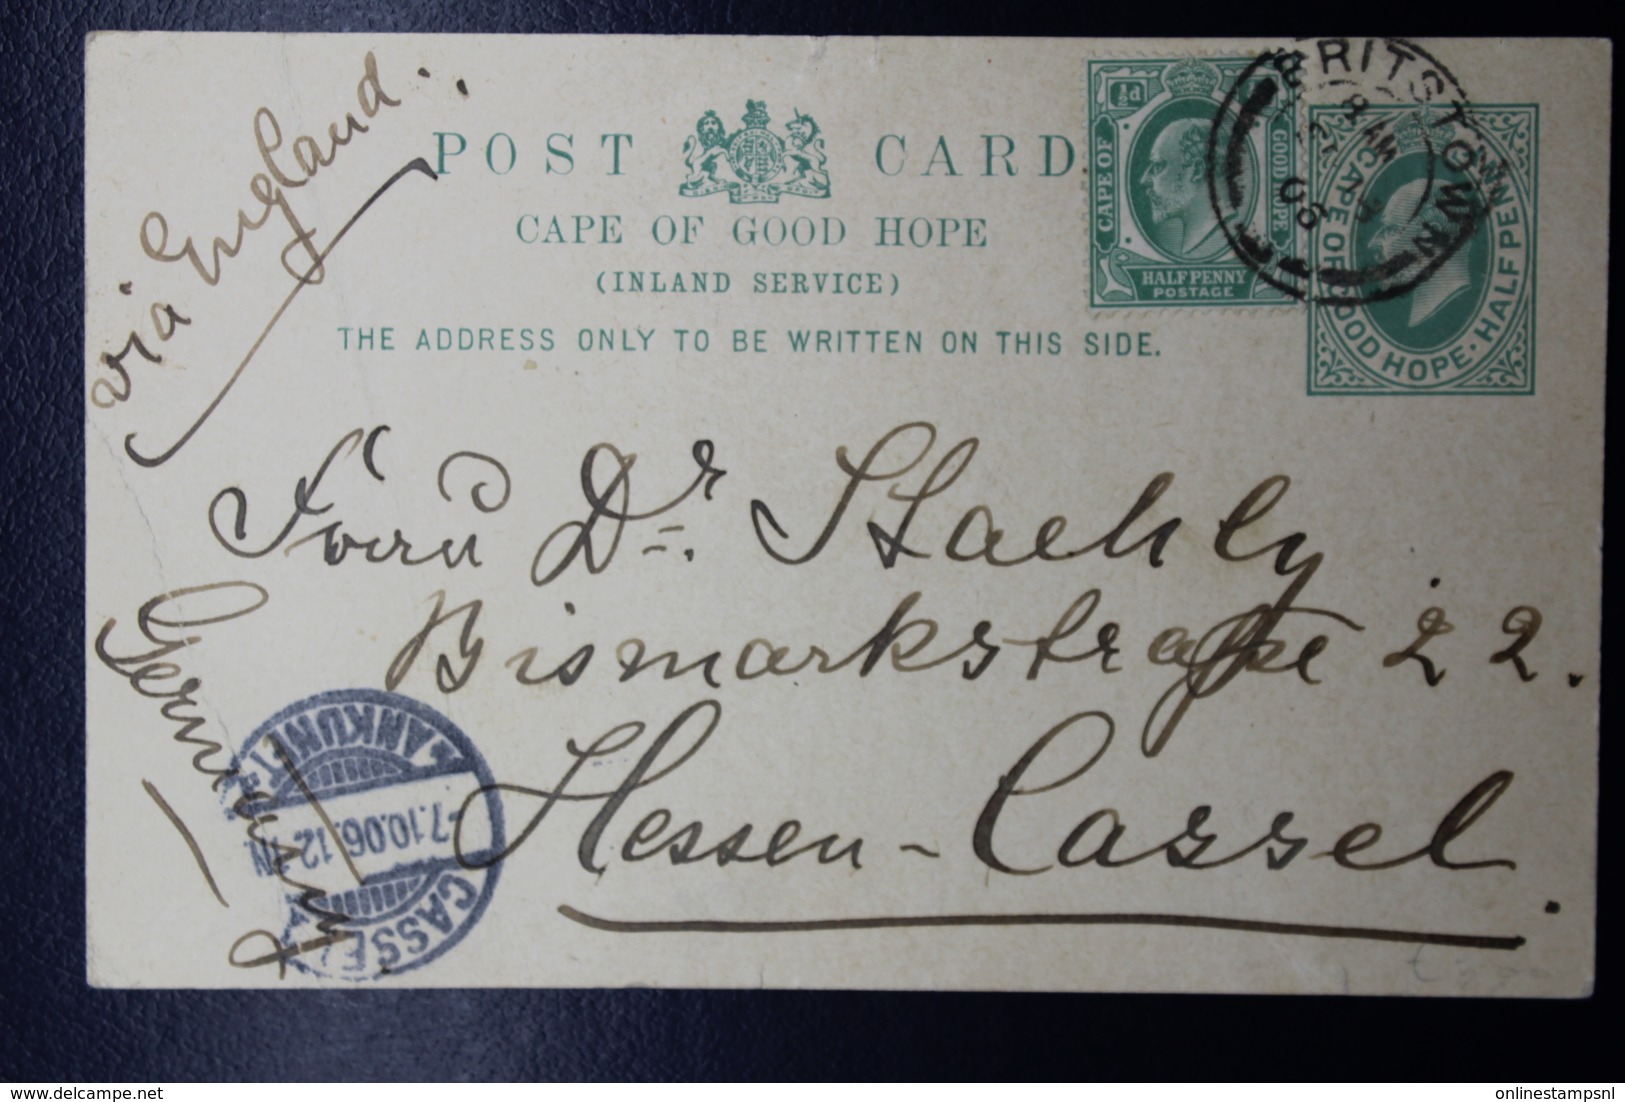 Cape Of Good Hope Uprated Postcard P17 Britstown -> Cassel Germany 1906 - Capo Di Buona Speranza (1853-1904)